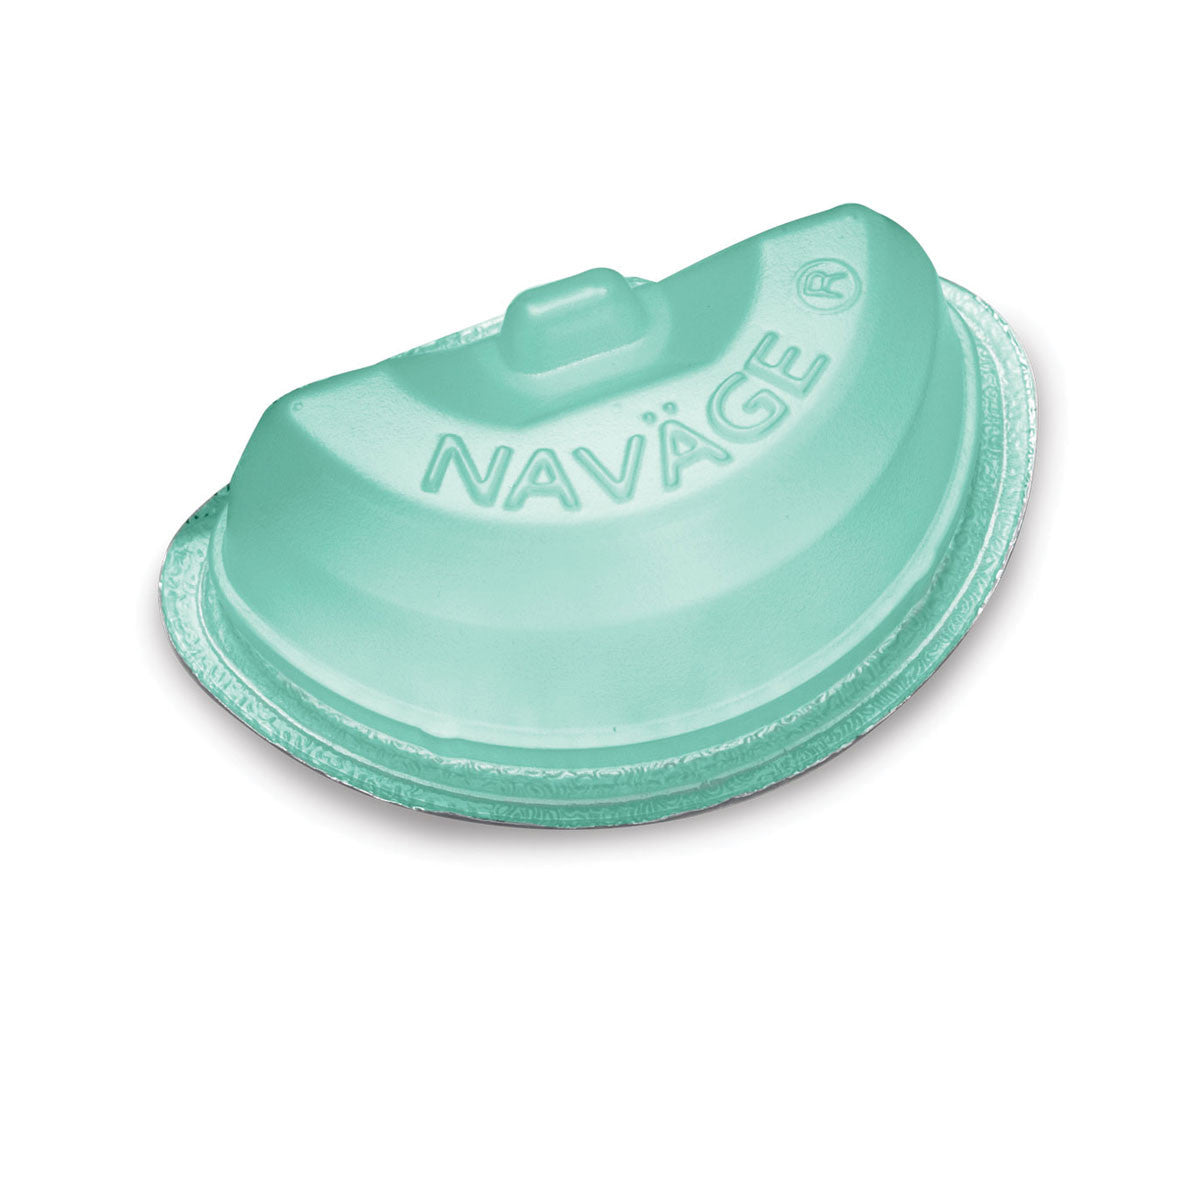 Navage Nasal Care Irrigation Kit - Reviews & FSA Eligibility